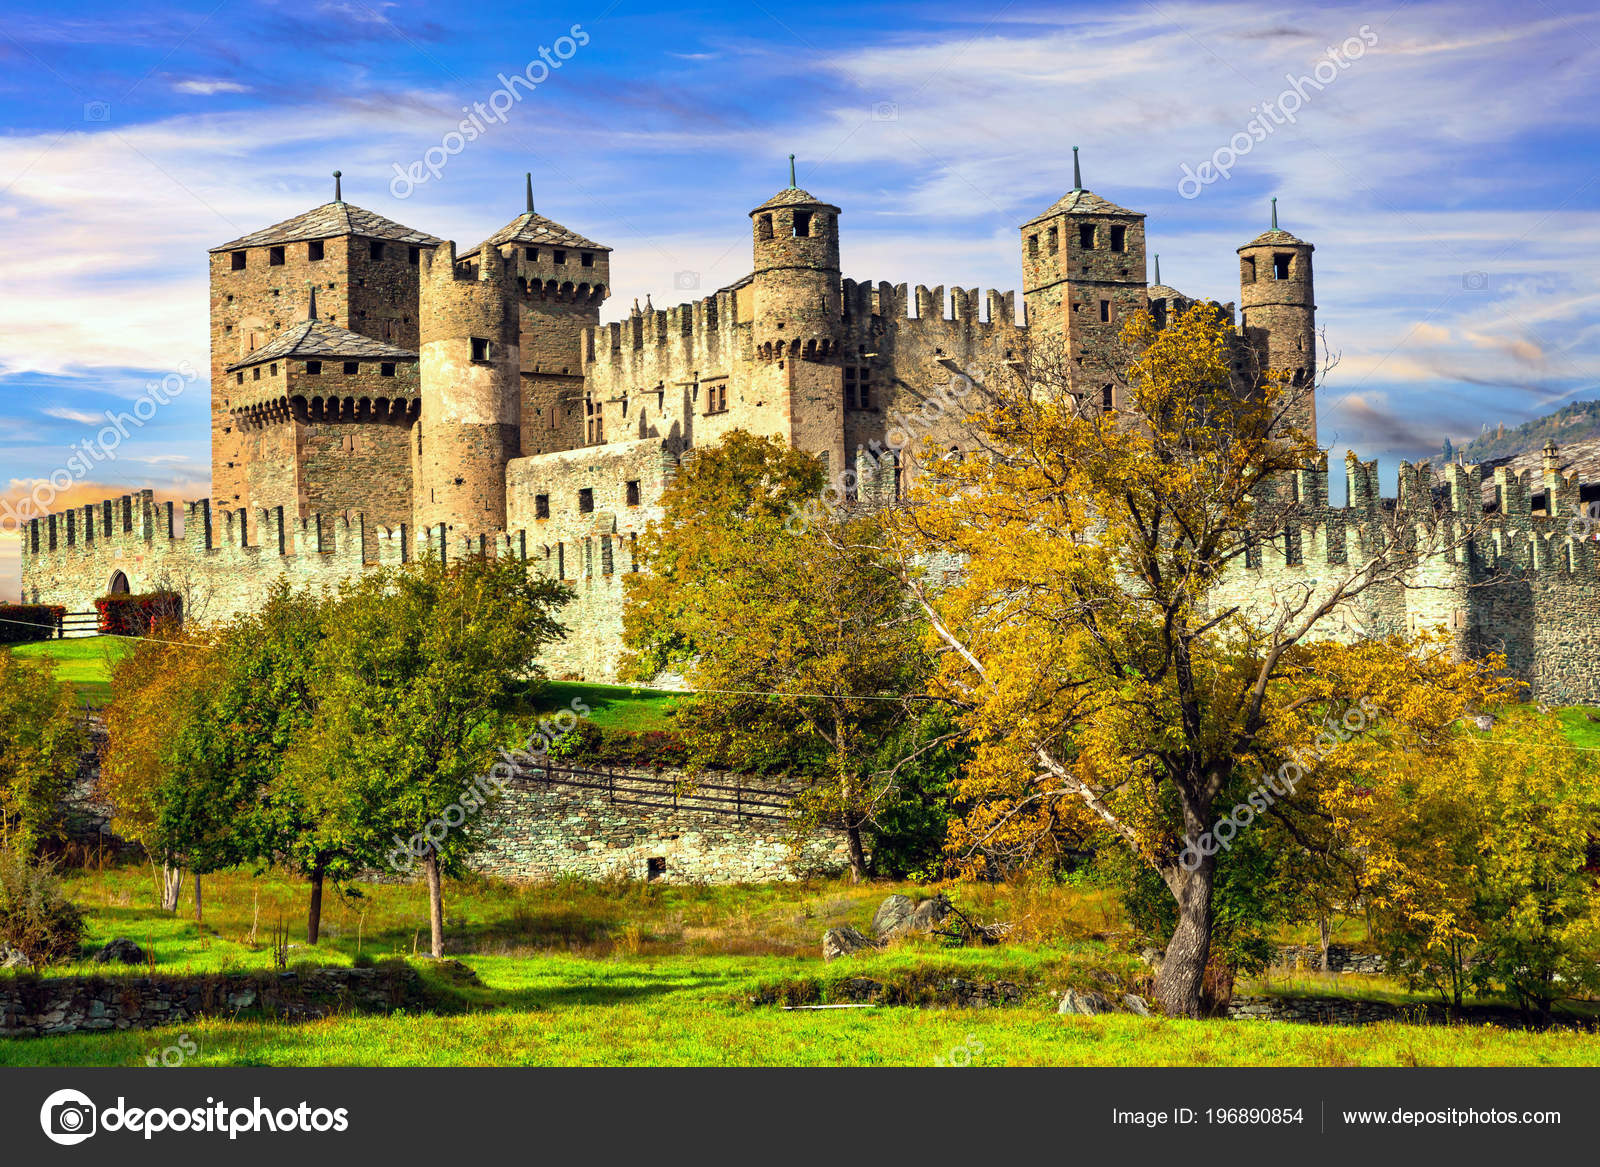 Medieval Italian Castles